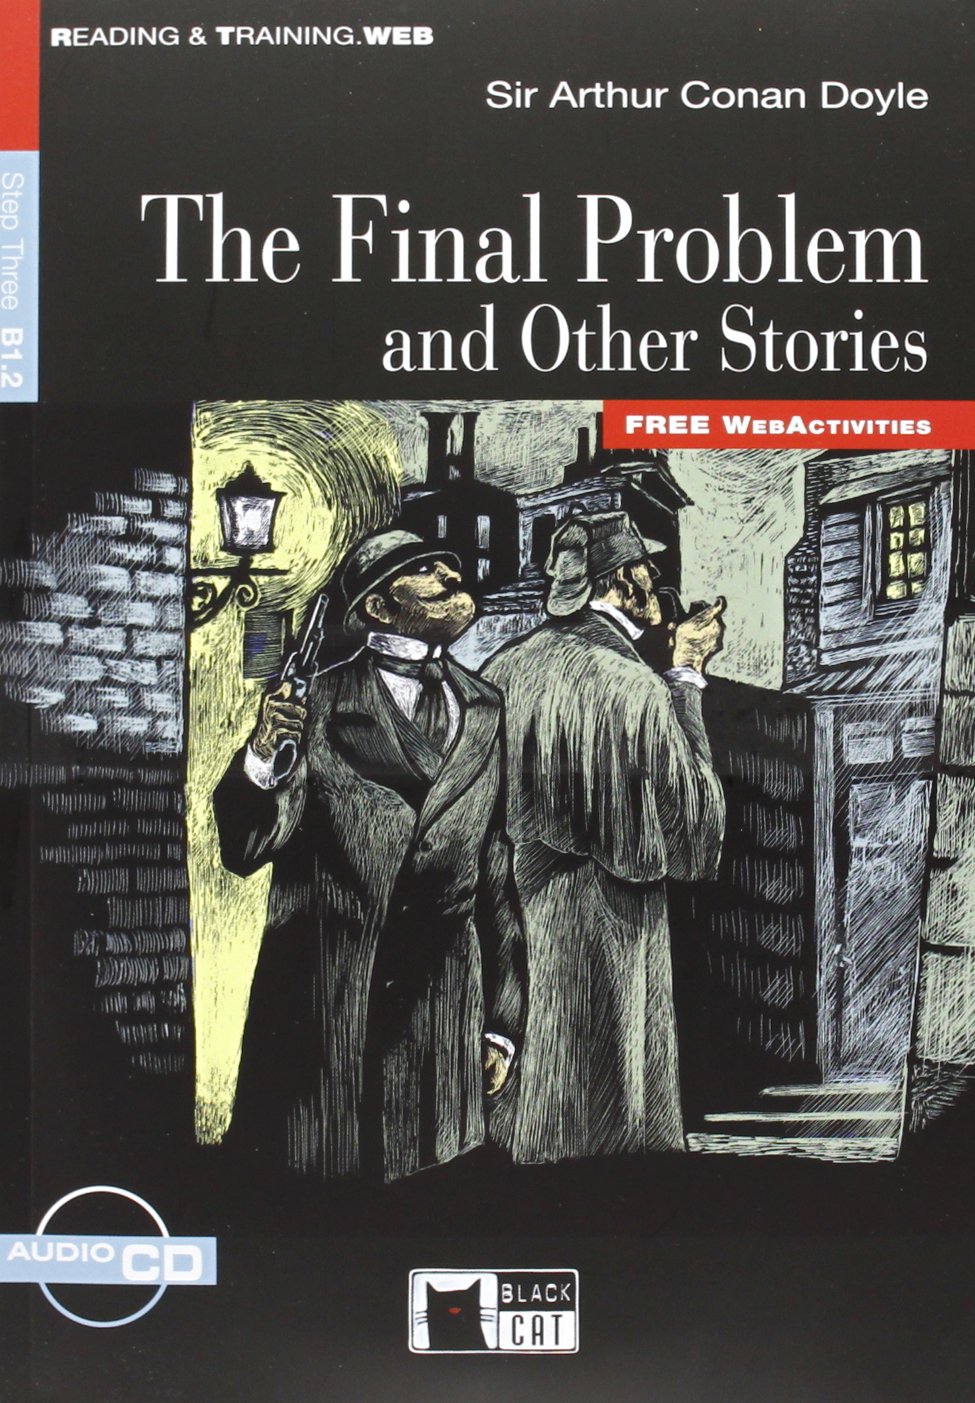 Vezi detalii pentru Reading & Training: The Final Problem and Other Stories + Audio CD | 